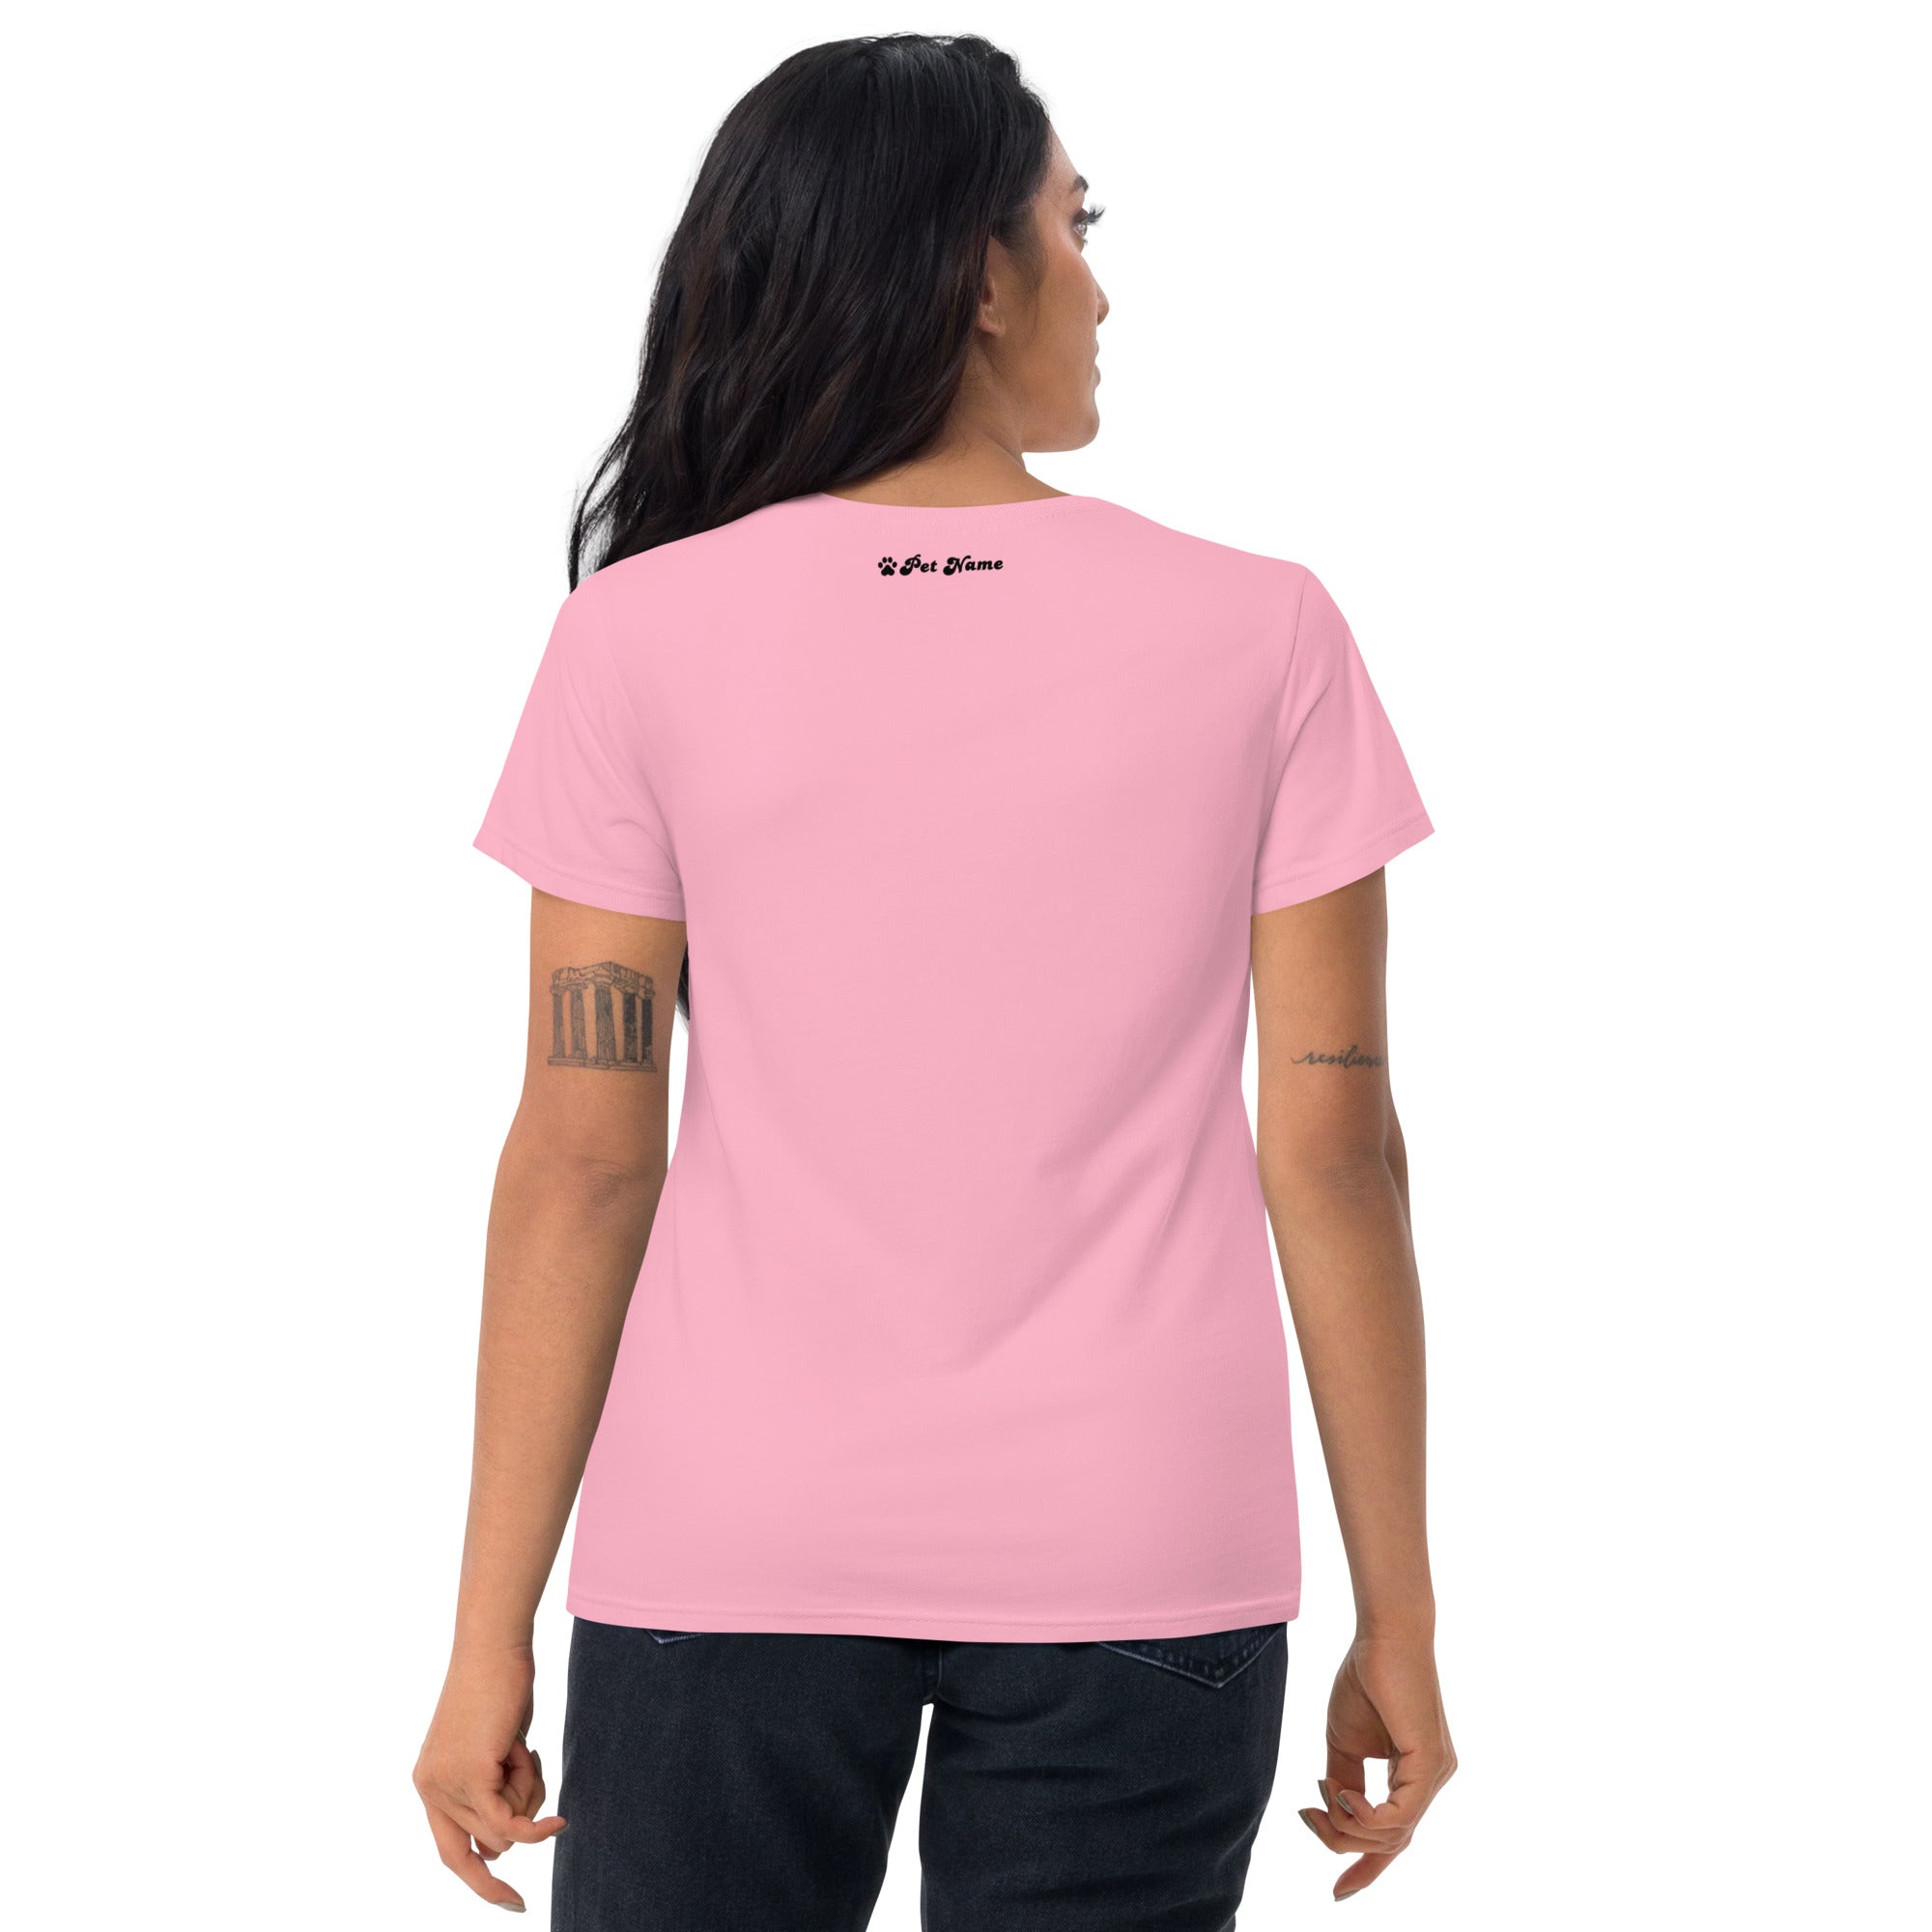 Dalmatian Women's short sleeve t-shirt